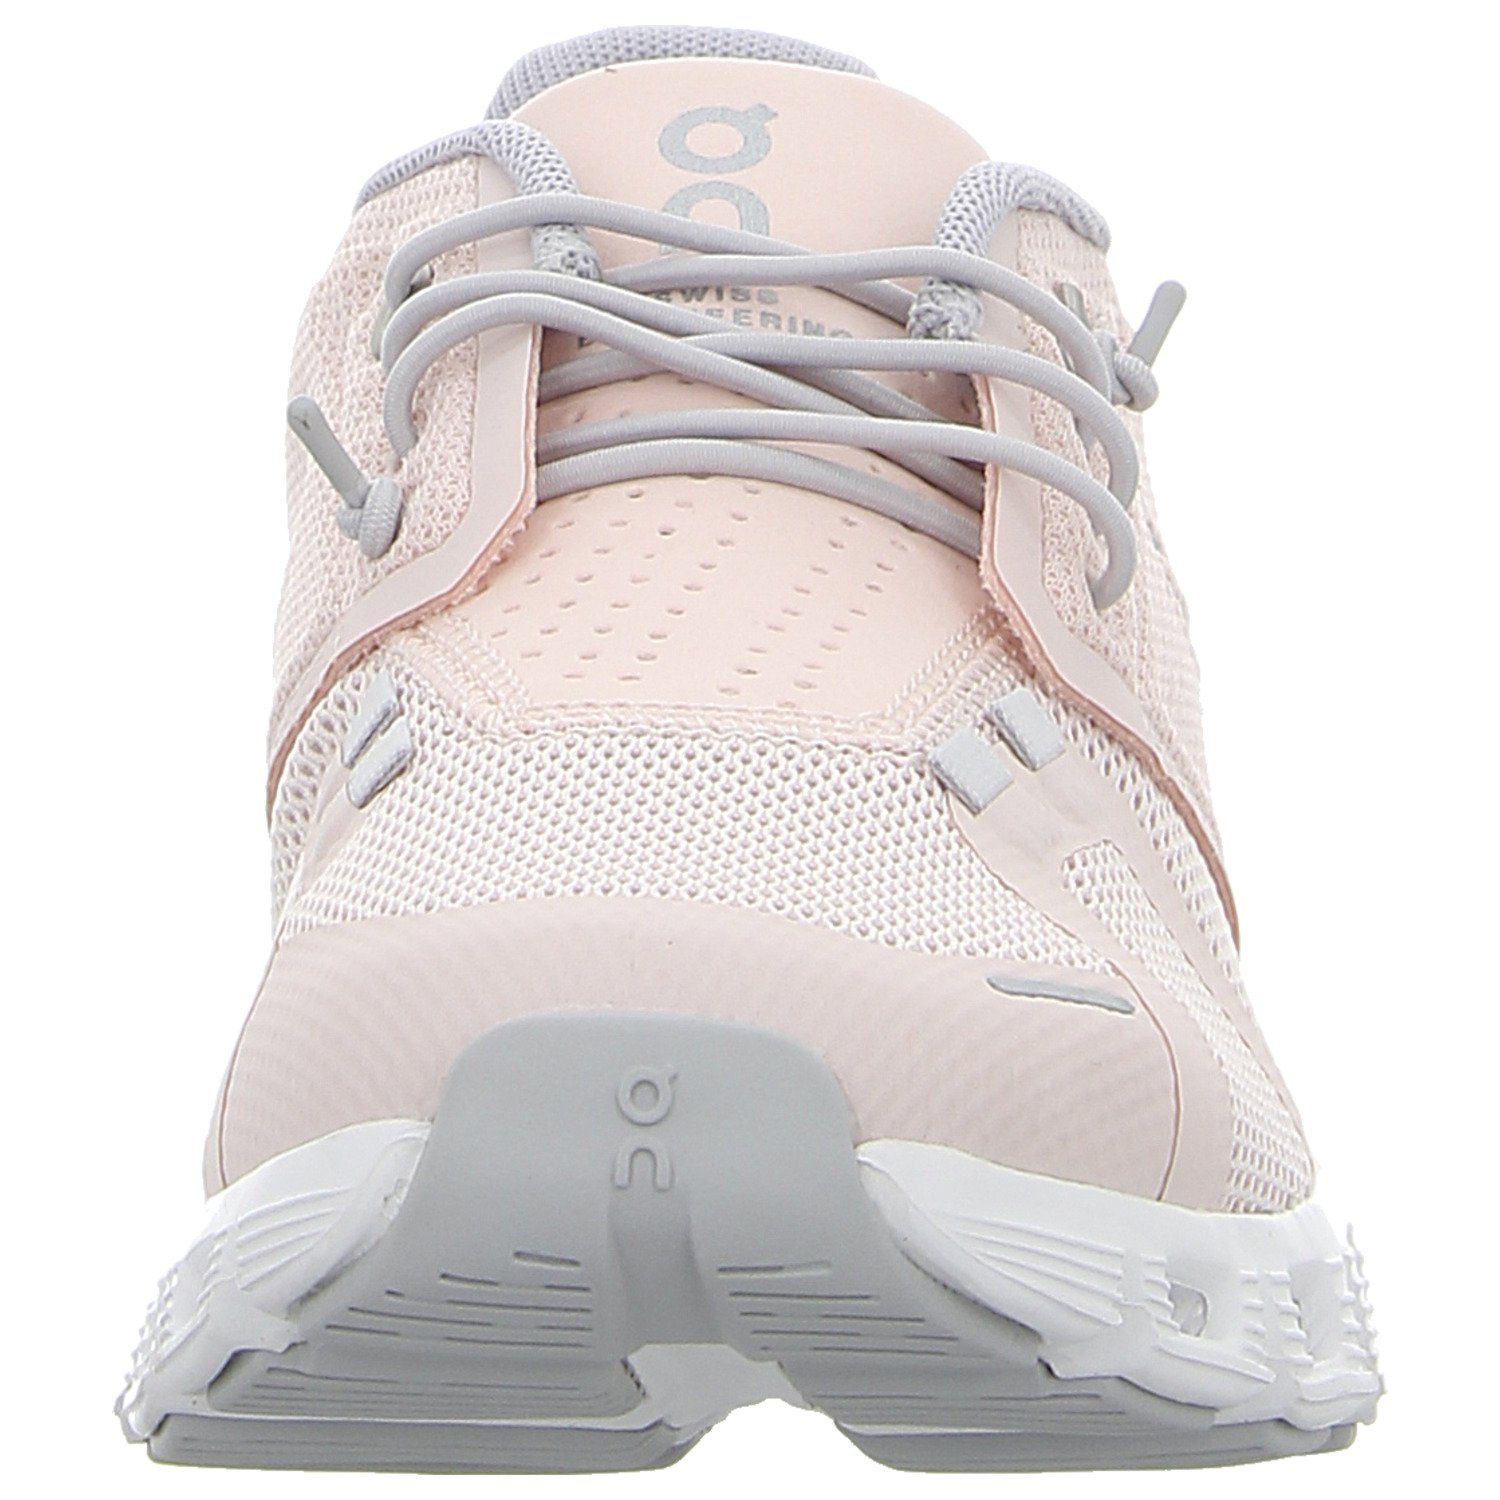 ON 5 rosa-weiß RUNNING Cloud Sneaker